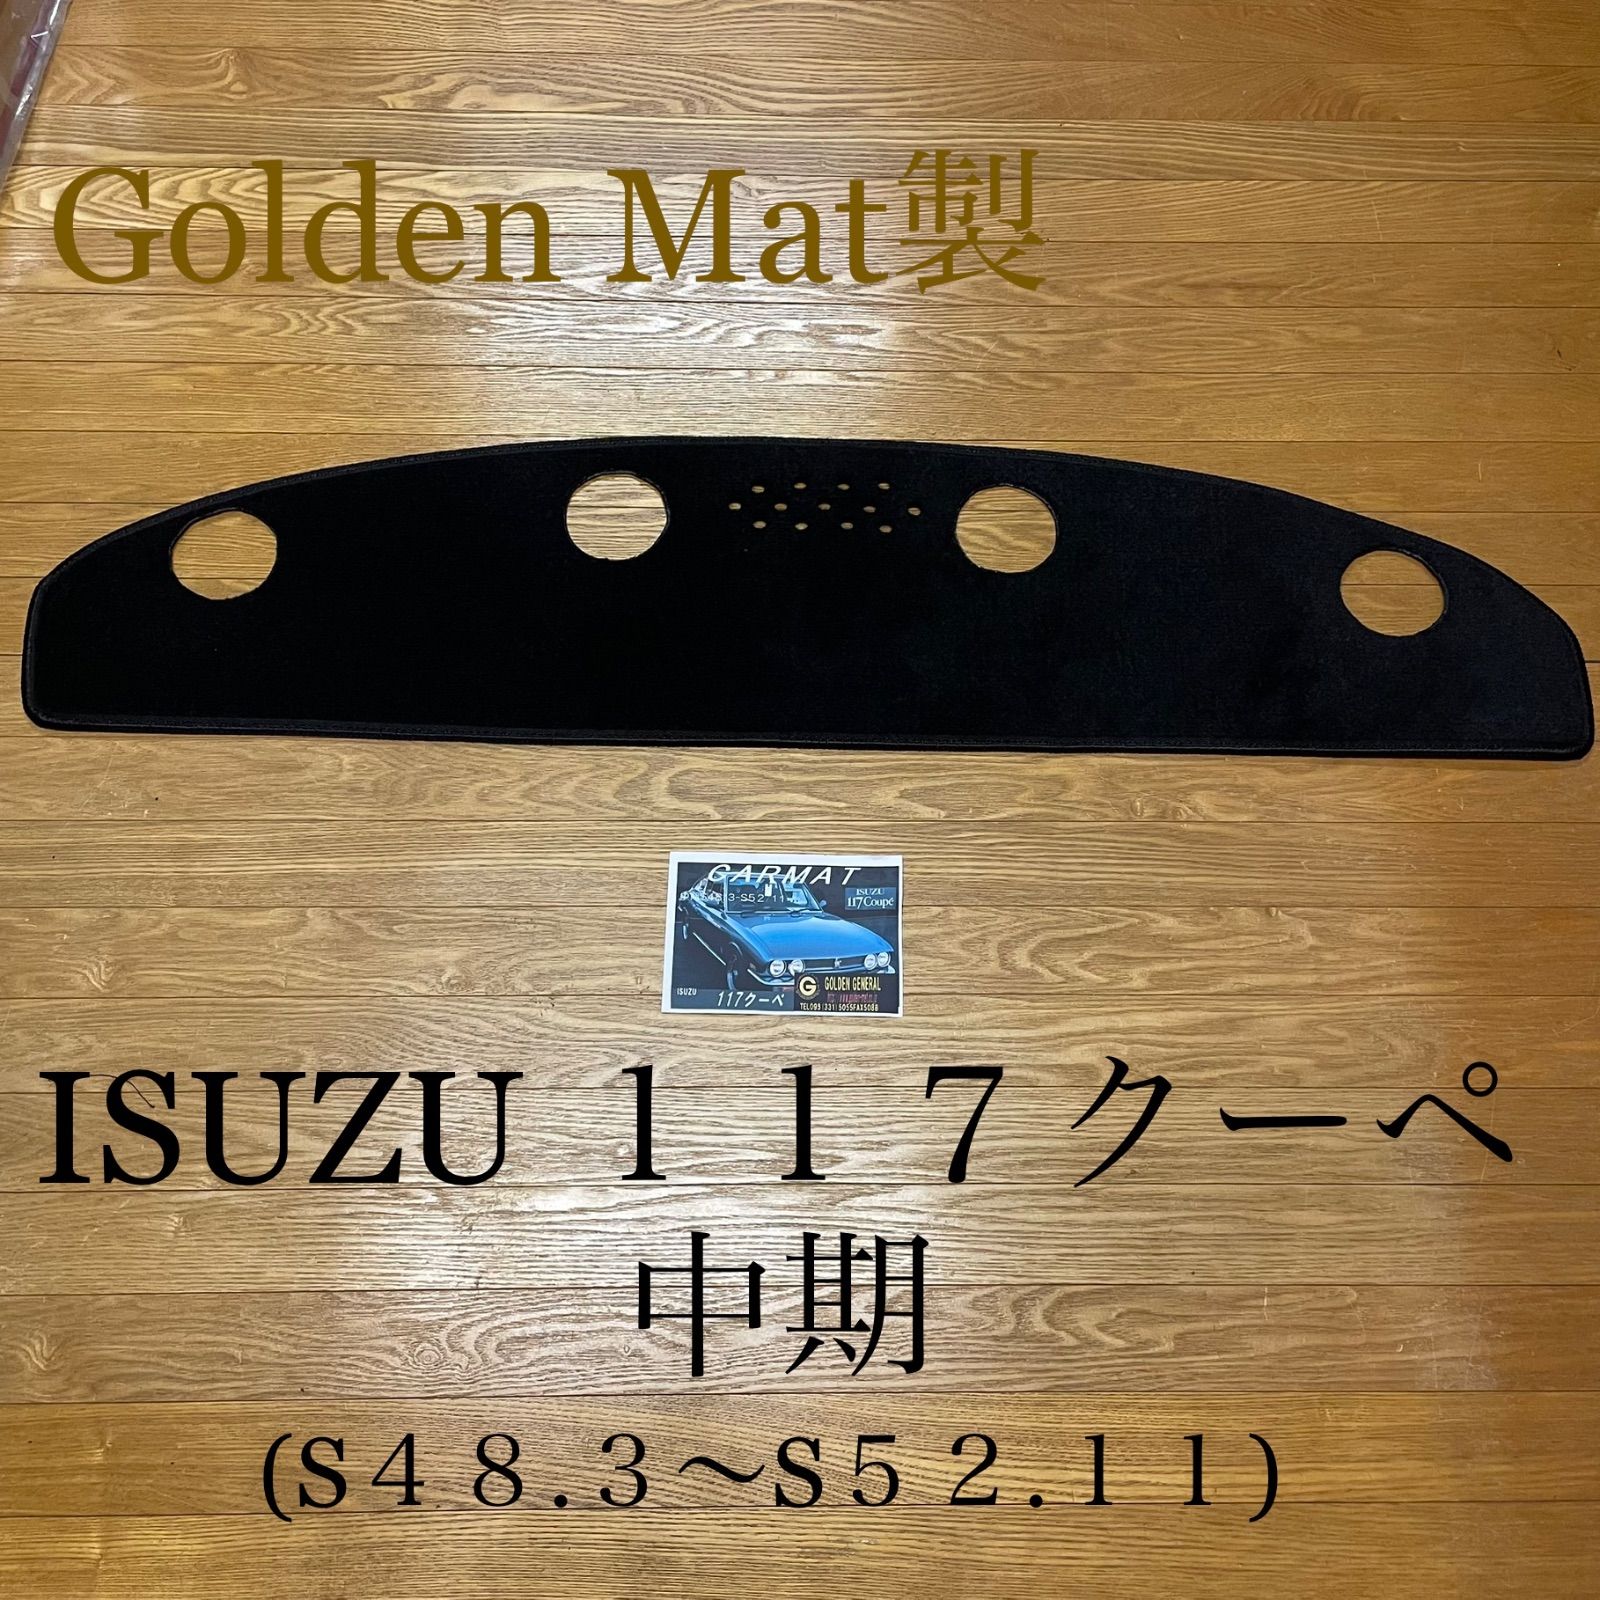 ISUZU＊117クーペ＊ダッシュボードマット＊Golden Mat製 - メルカリ